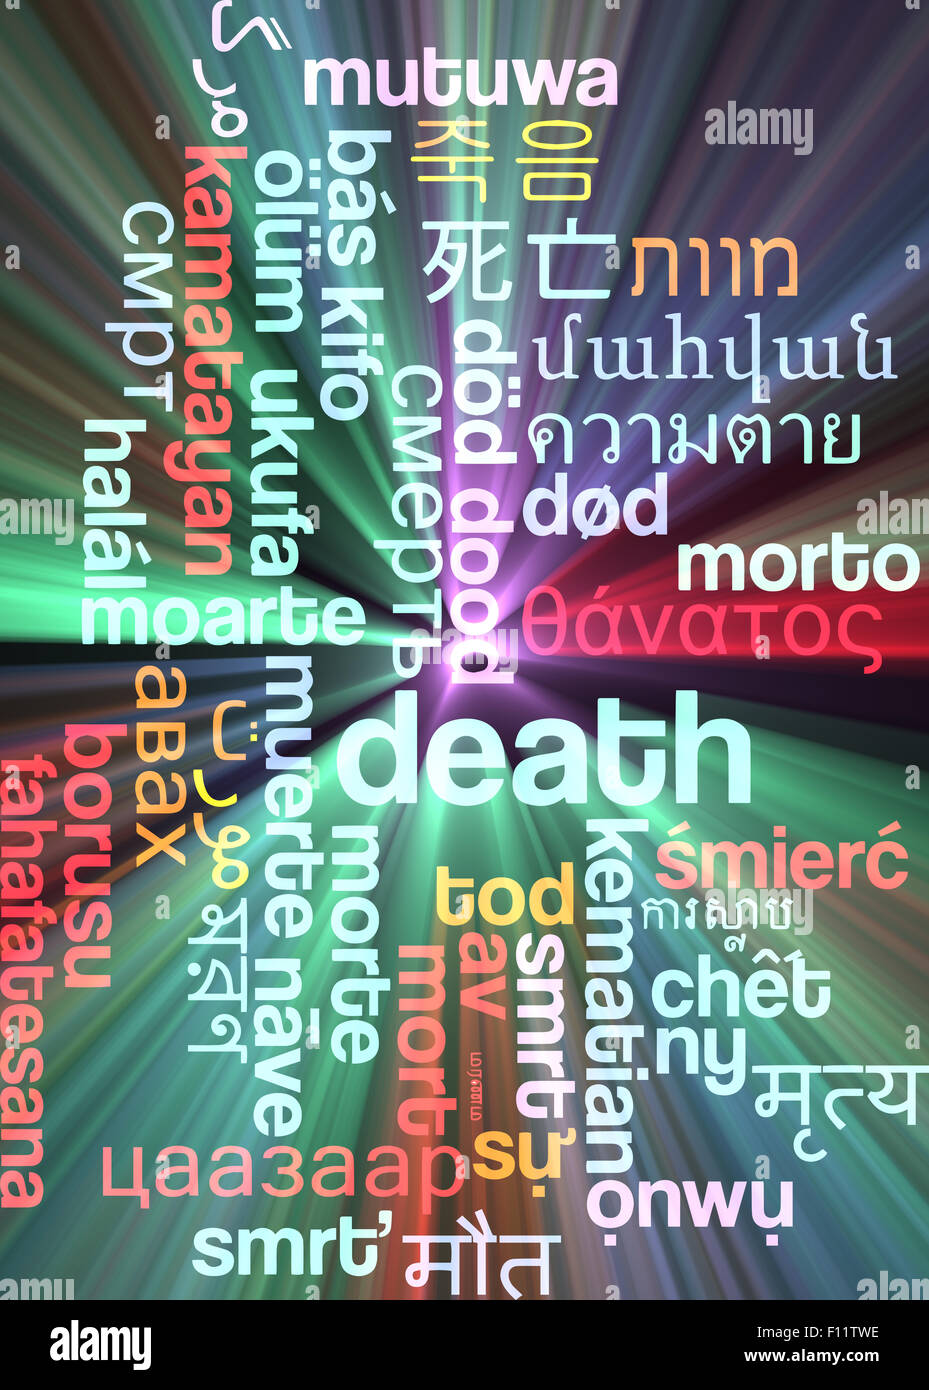 Background concept wordcloud multilanguage international many language illustration of death glowing light Stock Photo